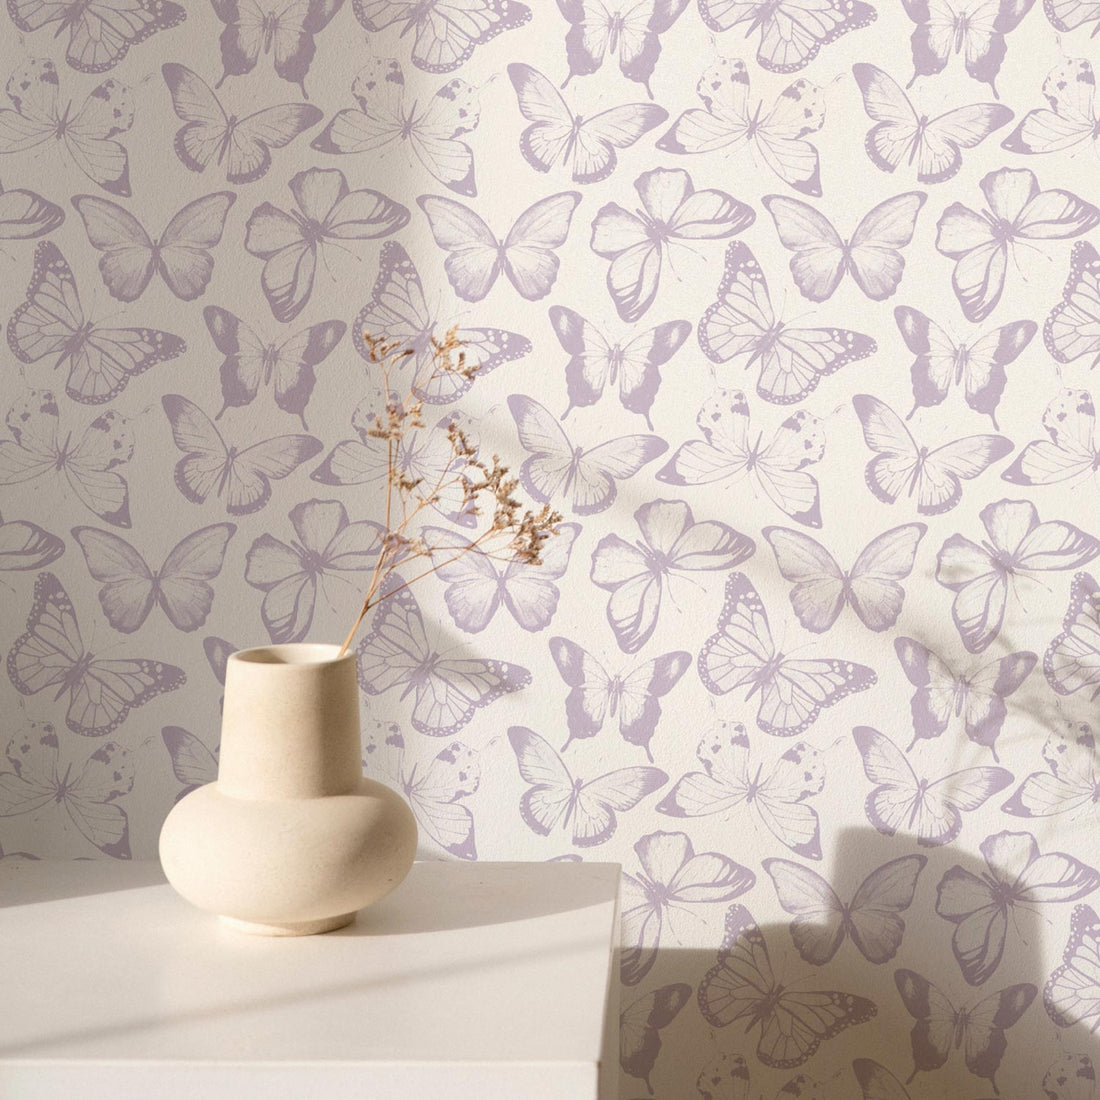 Lavender watercolor butterflies wallpaper in light girls room interior